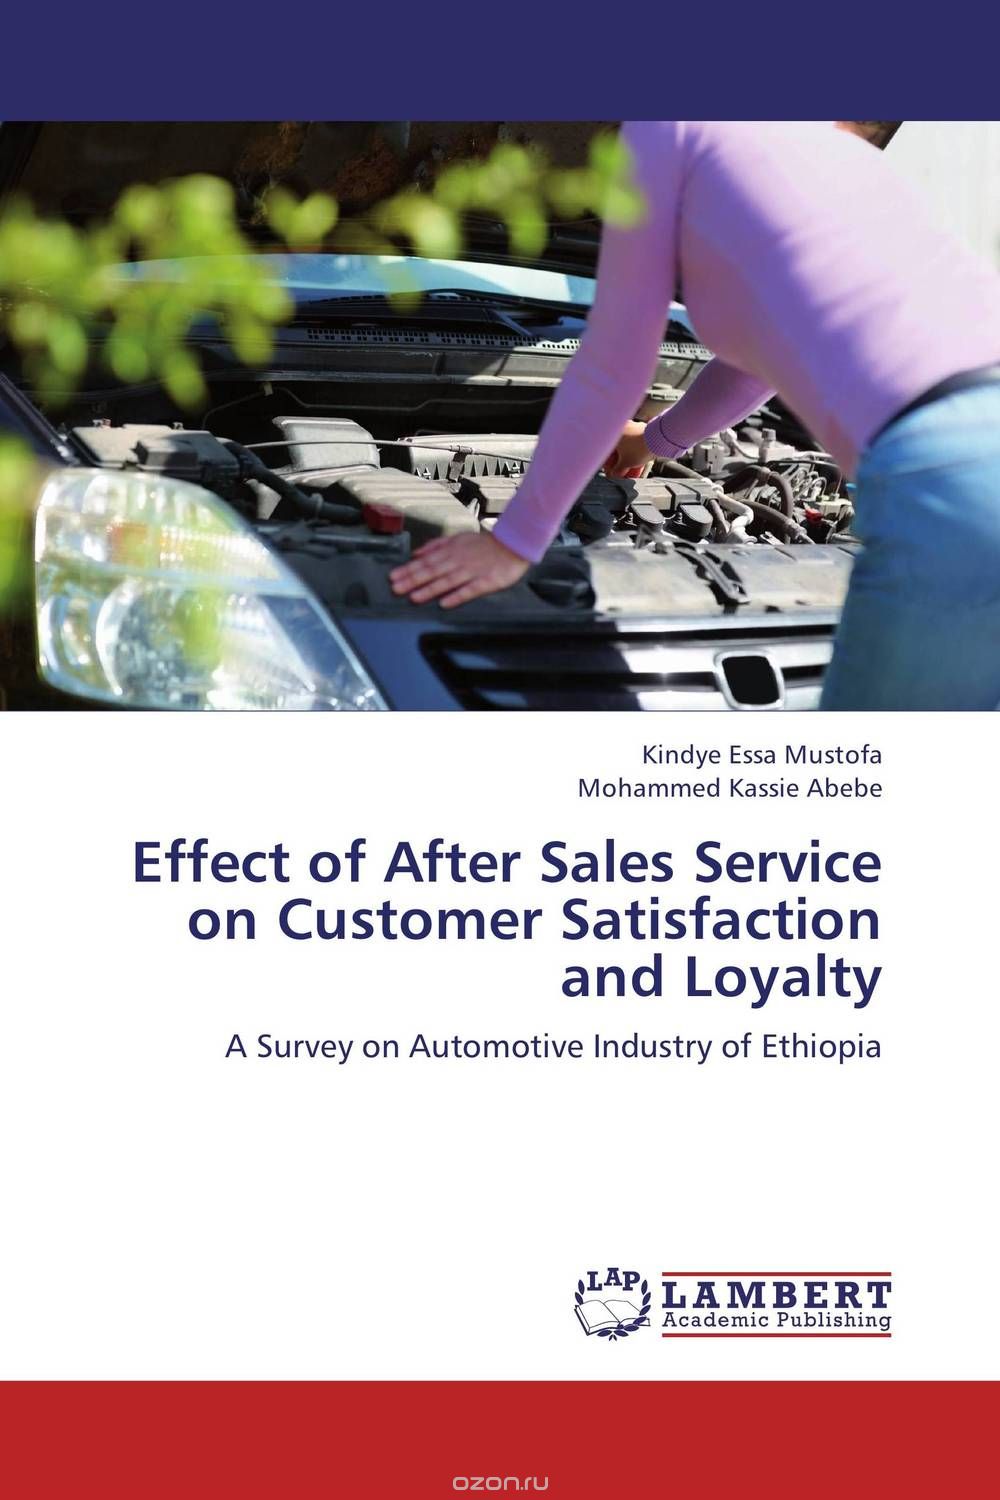 Скачать книгу "Effect of After Sales Service on Customer Satisfaction and Loyalty"